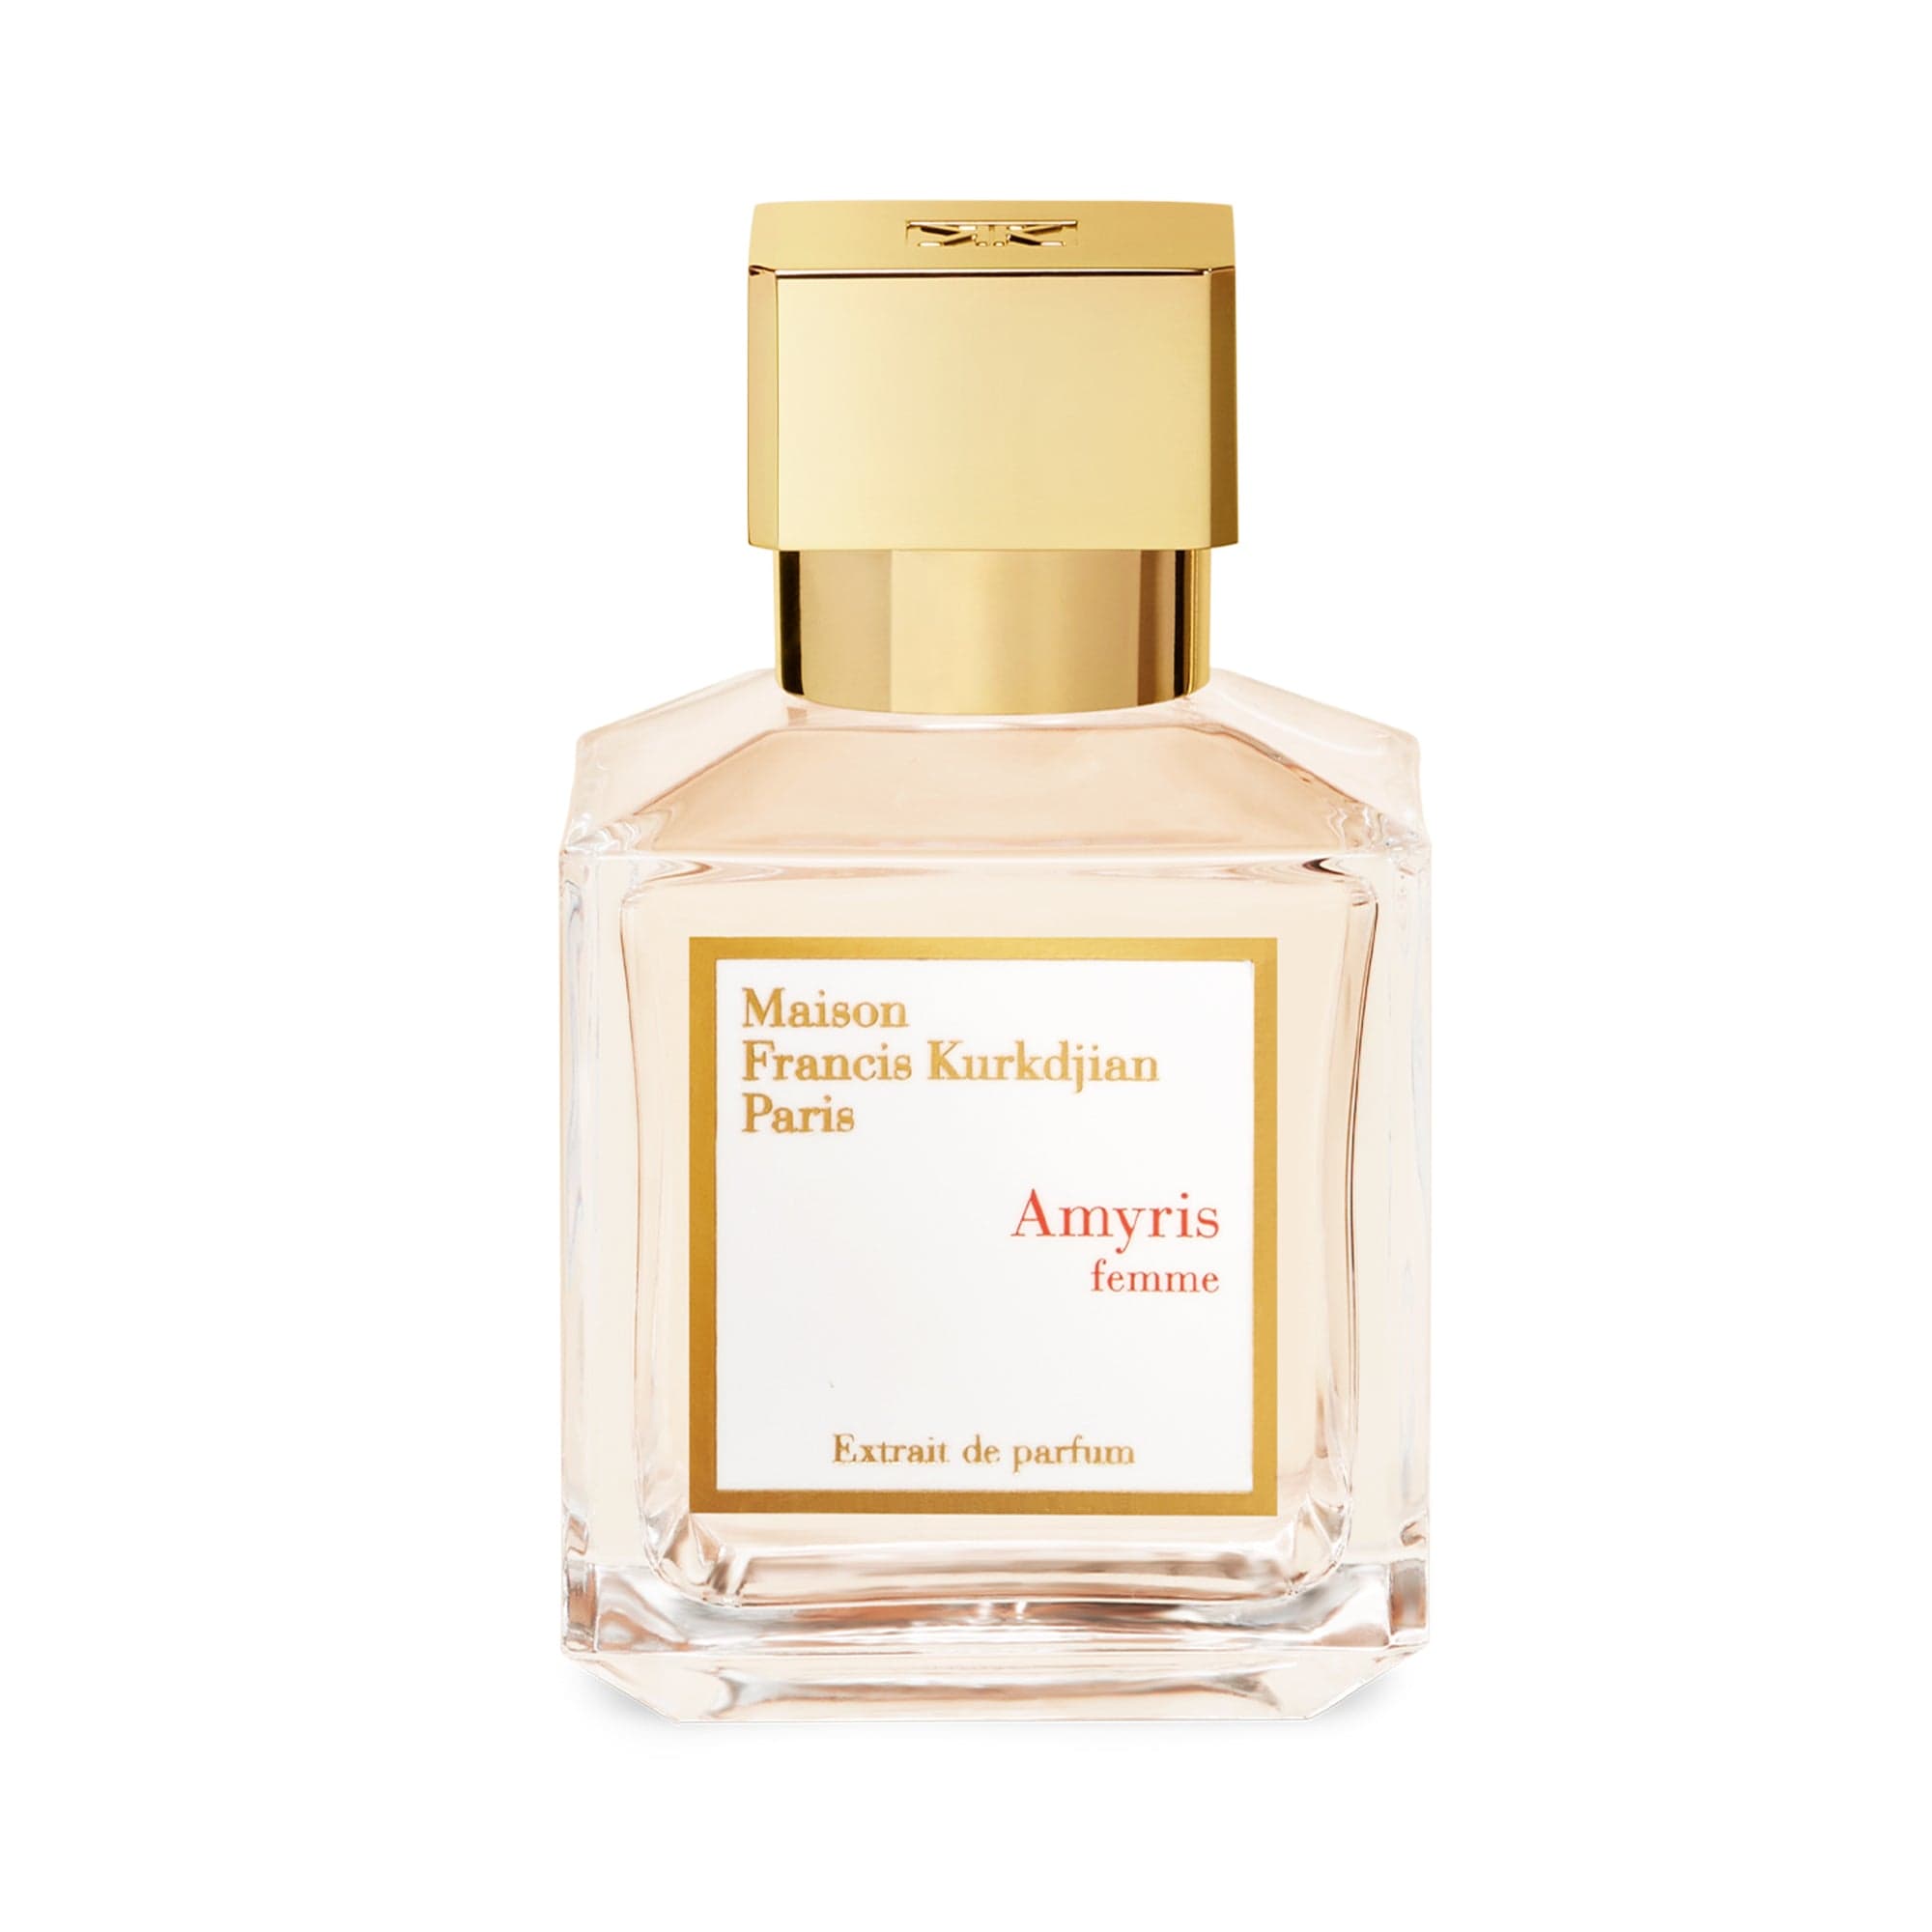 Amyris Femme Perfume Extract Maison Francis Kurkdjian